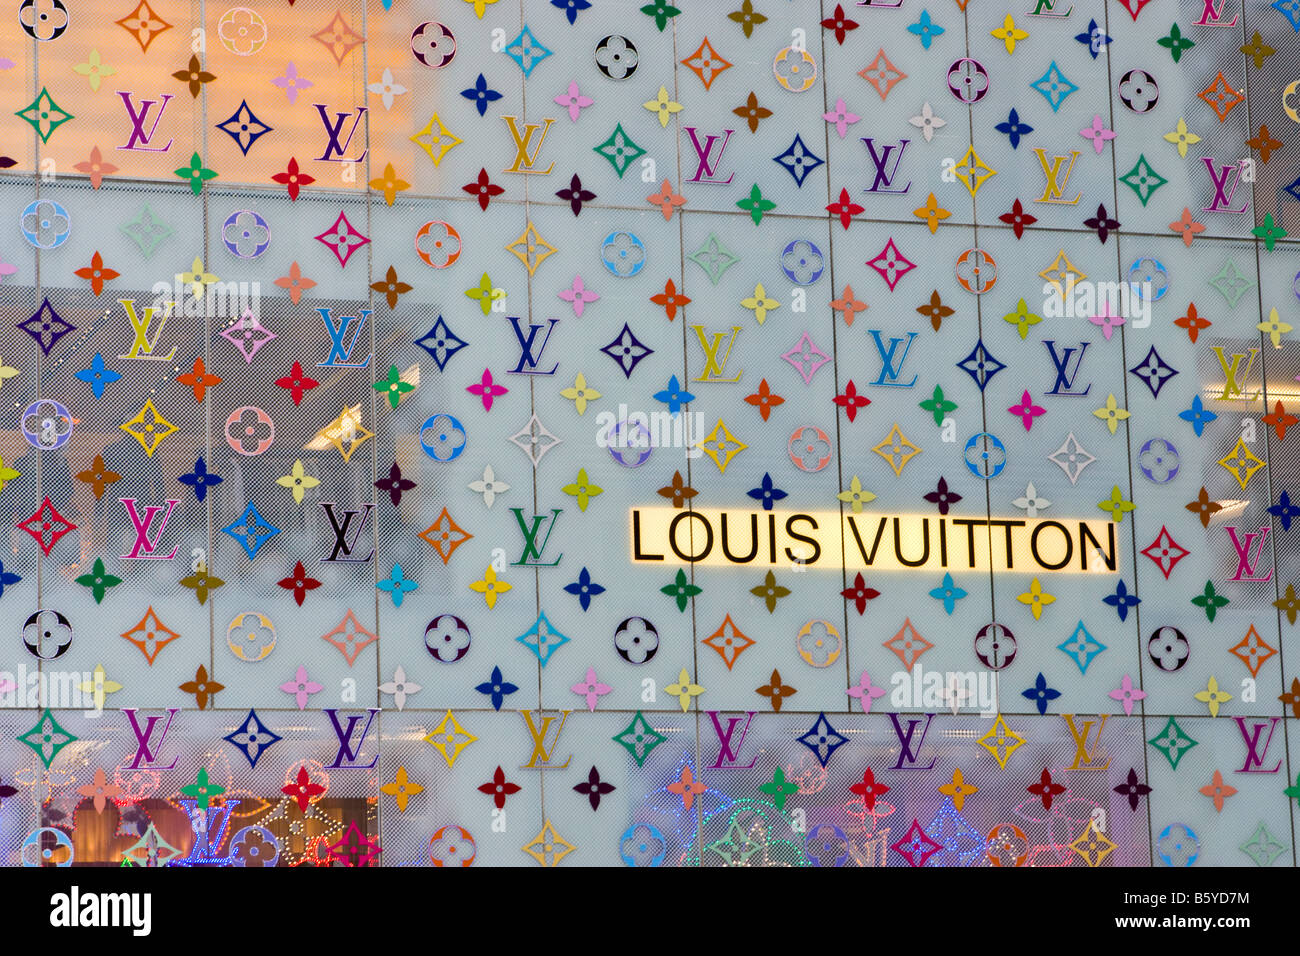 Louis Vuitton New York City Stock Photo - Download Image Now - Louis Vuitton  - Designer Label, Store, Fifth Avenue - iStock